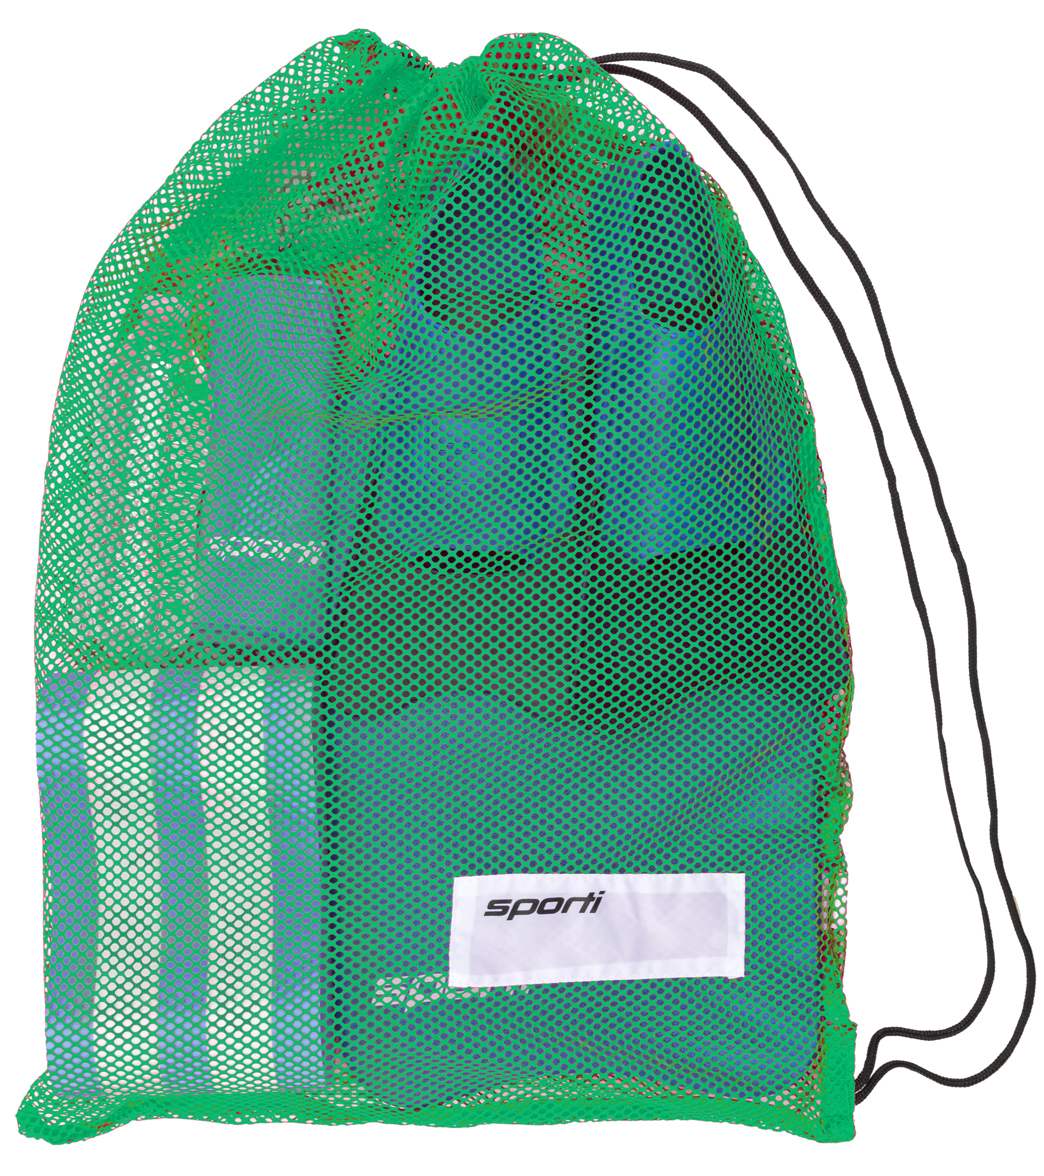 Sporti Mesh Bag - Kelly Green Polyester - Swimoutlet.com